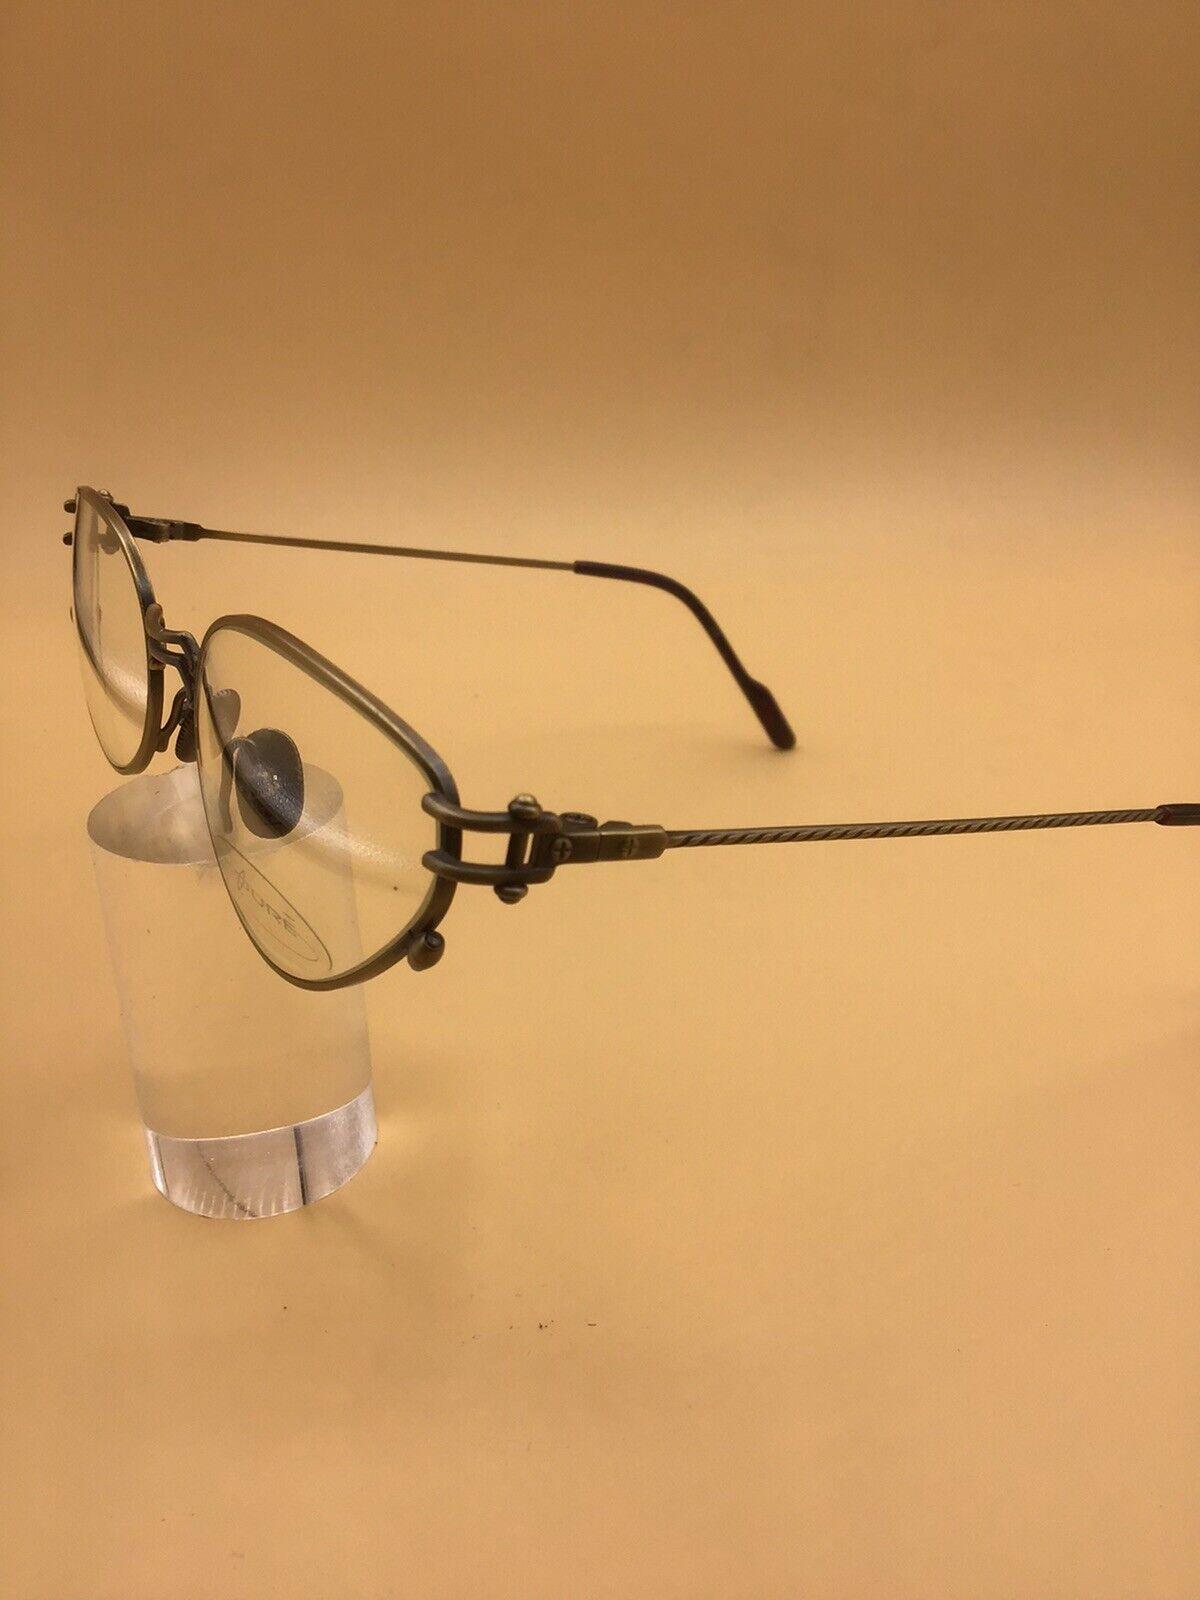 Koure occhiale vintage eyewear frame brillen lunettes Modello KR806